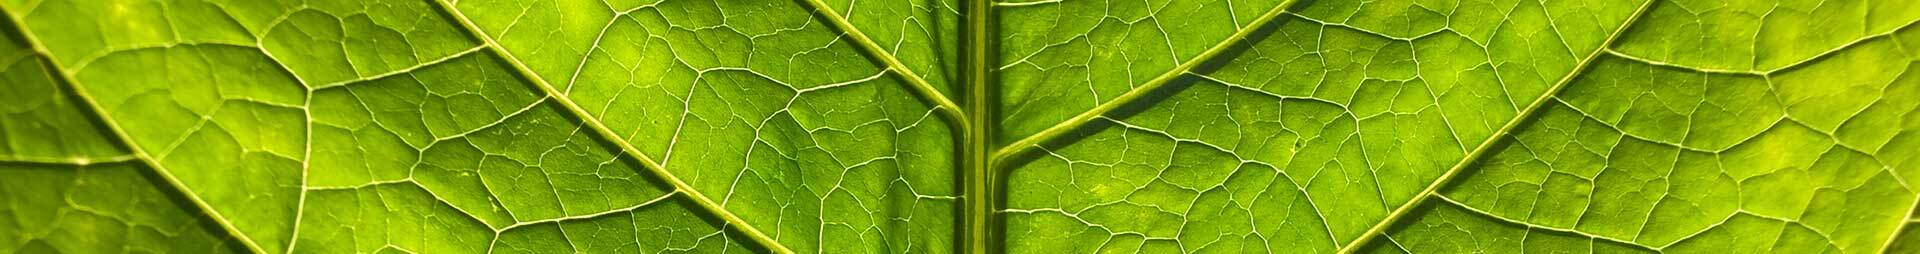 Close up Green Leaf Vein Structure